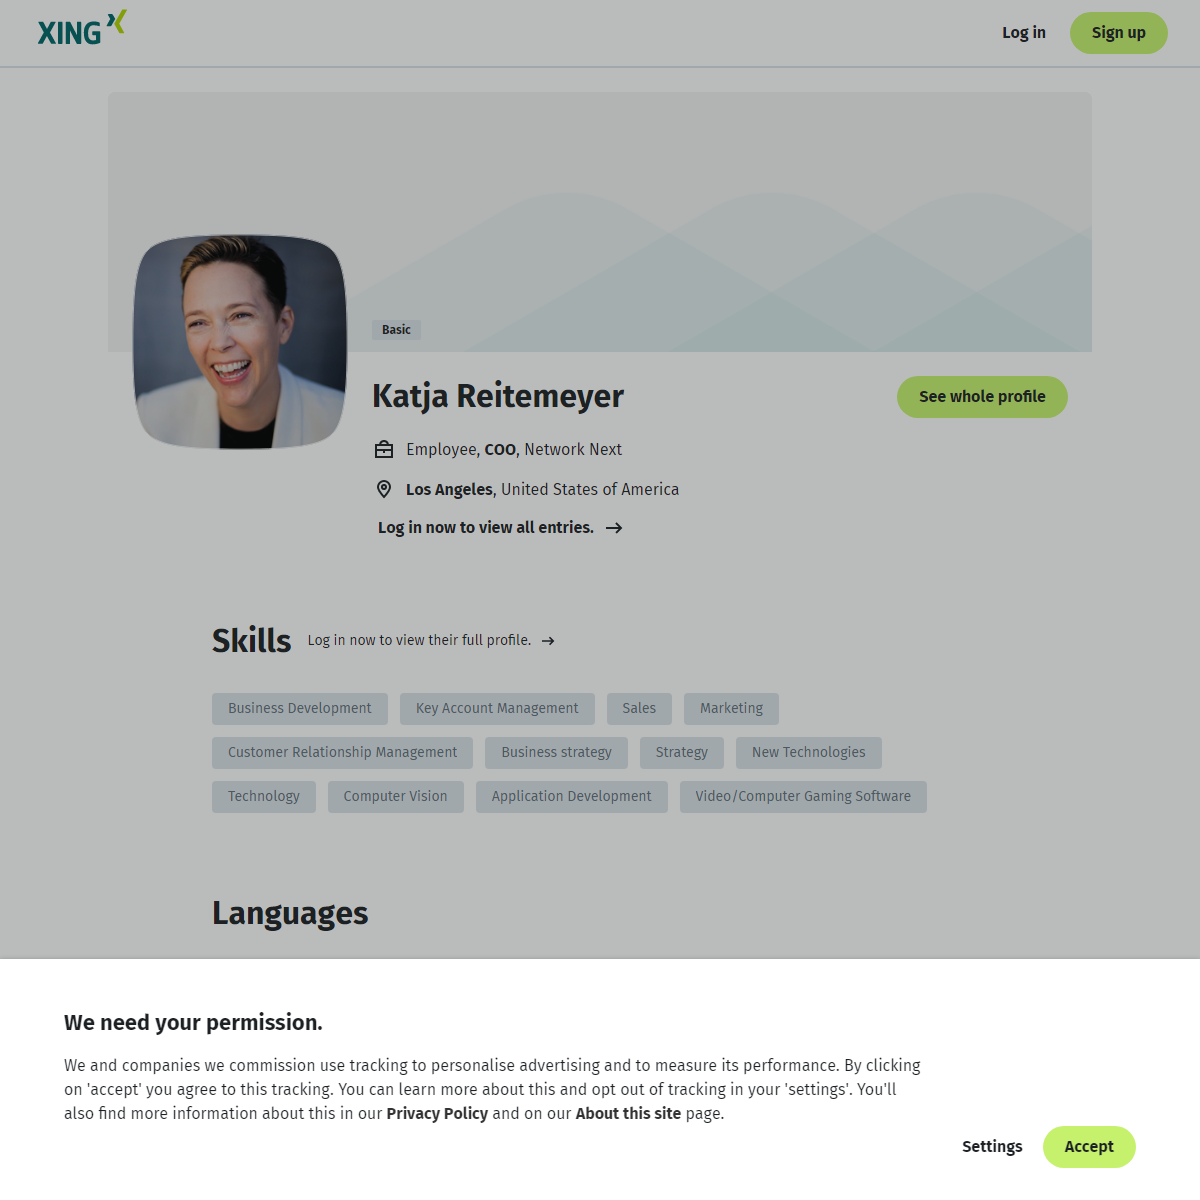 A complete backup of https://www.xing.com/profile/Katja_Reitemeyer